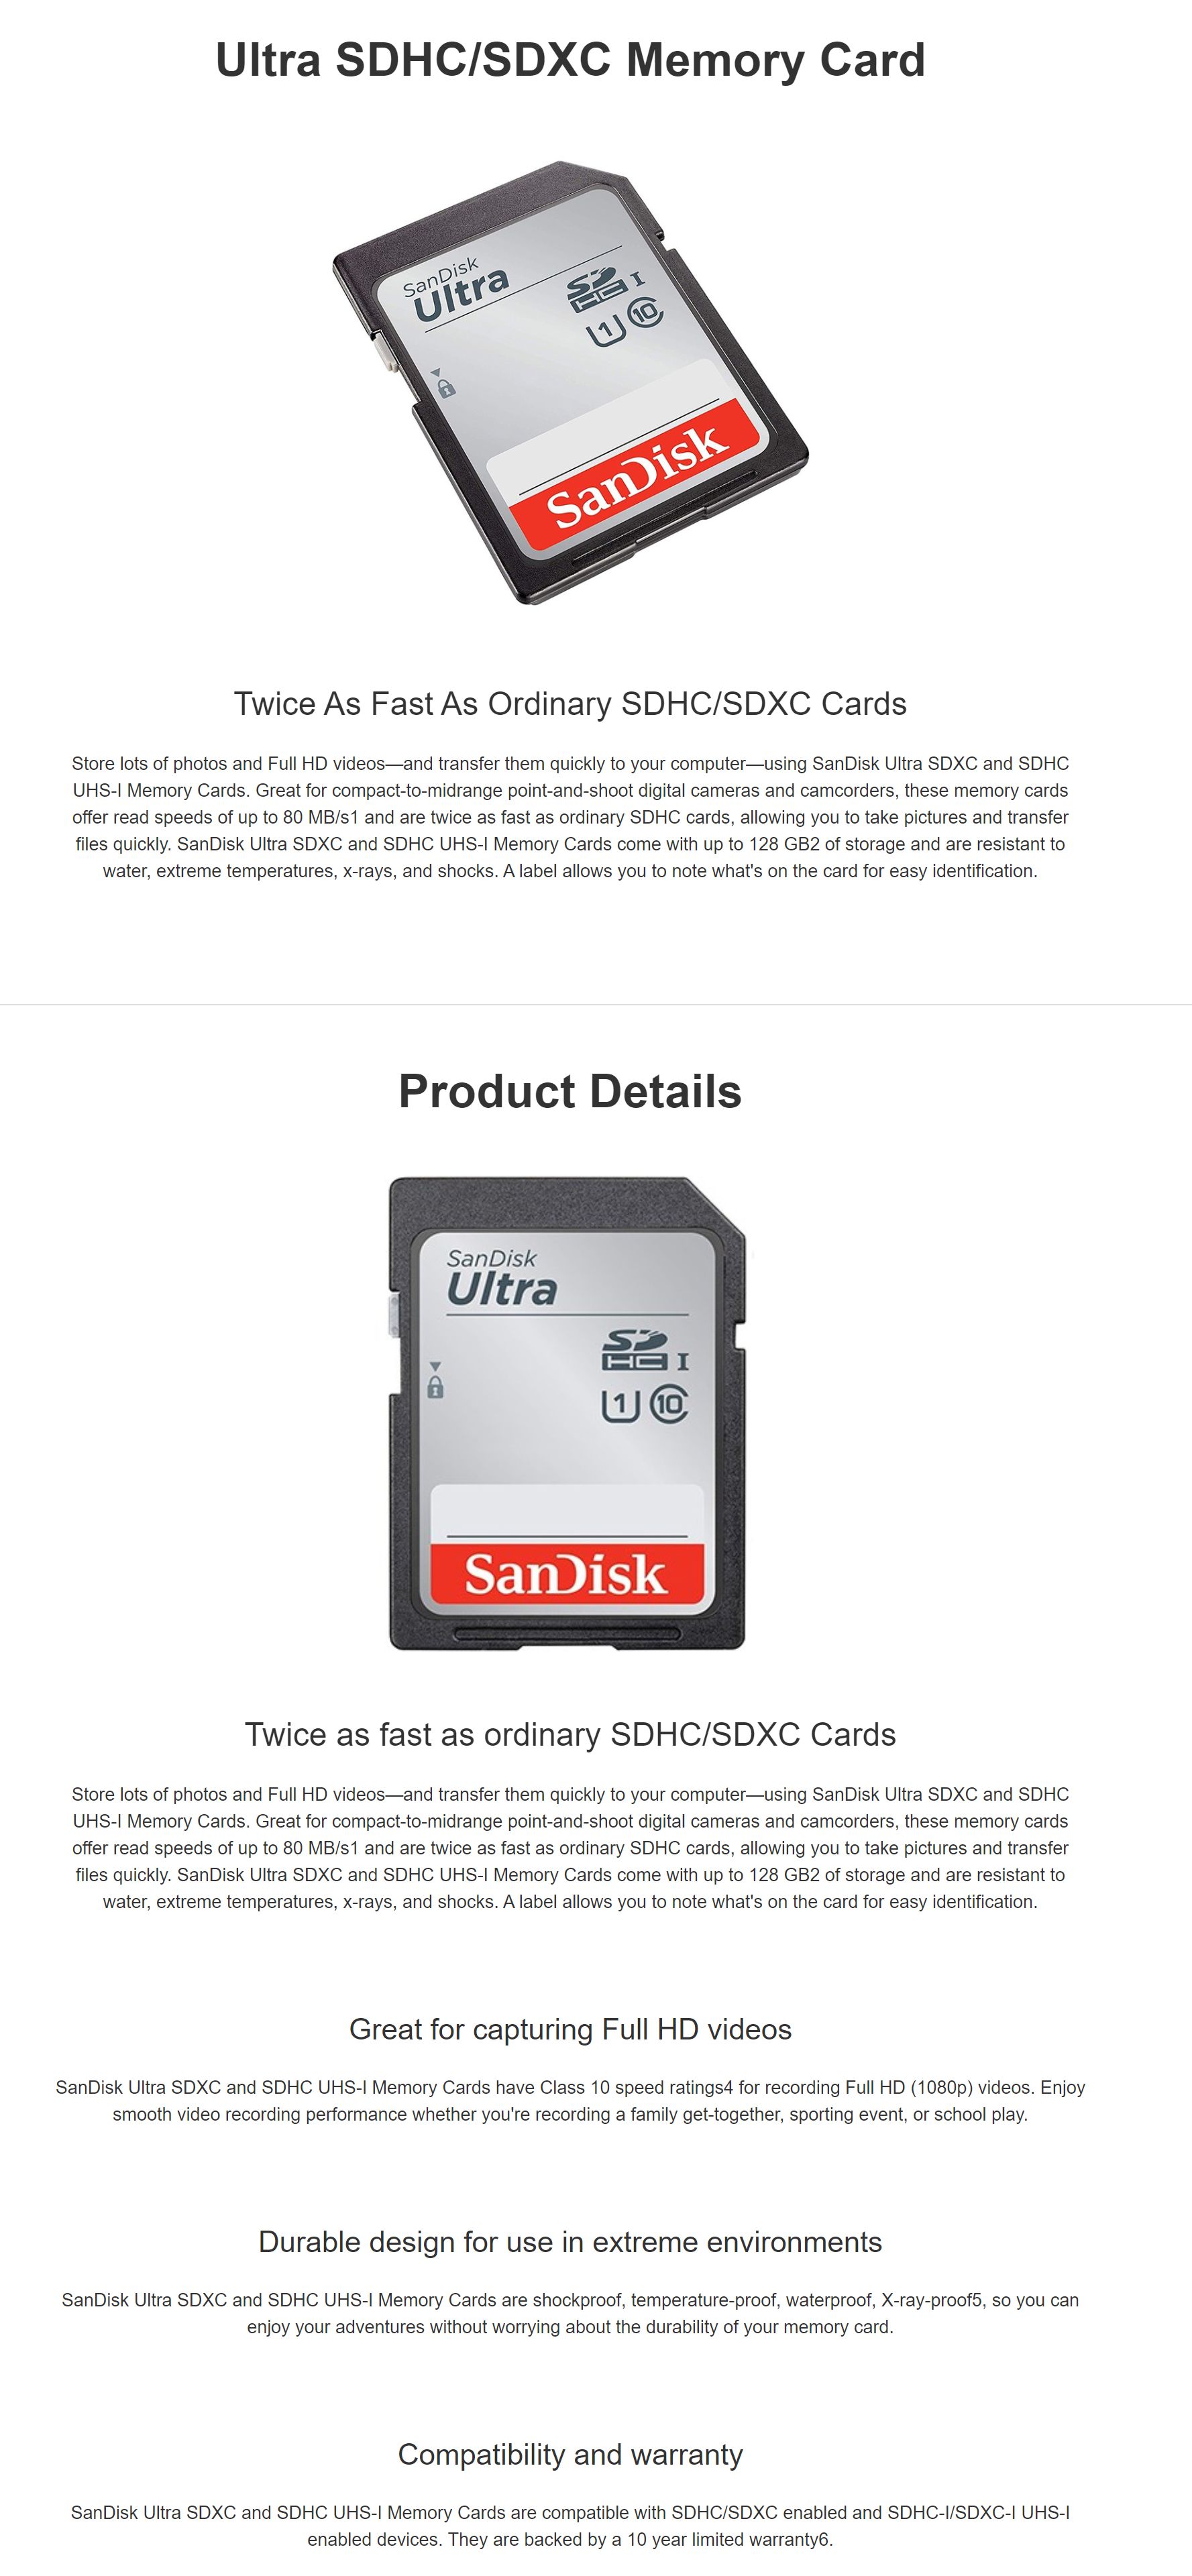 #1830 - 'SanDisk Ultra 32GB SDHC Class 10 U1 Memory Card - 90MB_s - SDSDUNR-032G I Mwave_com_au' - www_mwave_com_au.jpg